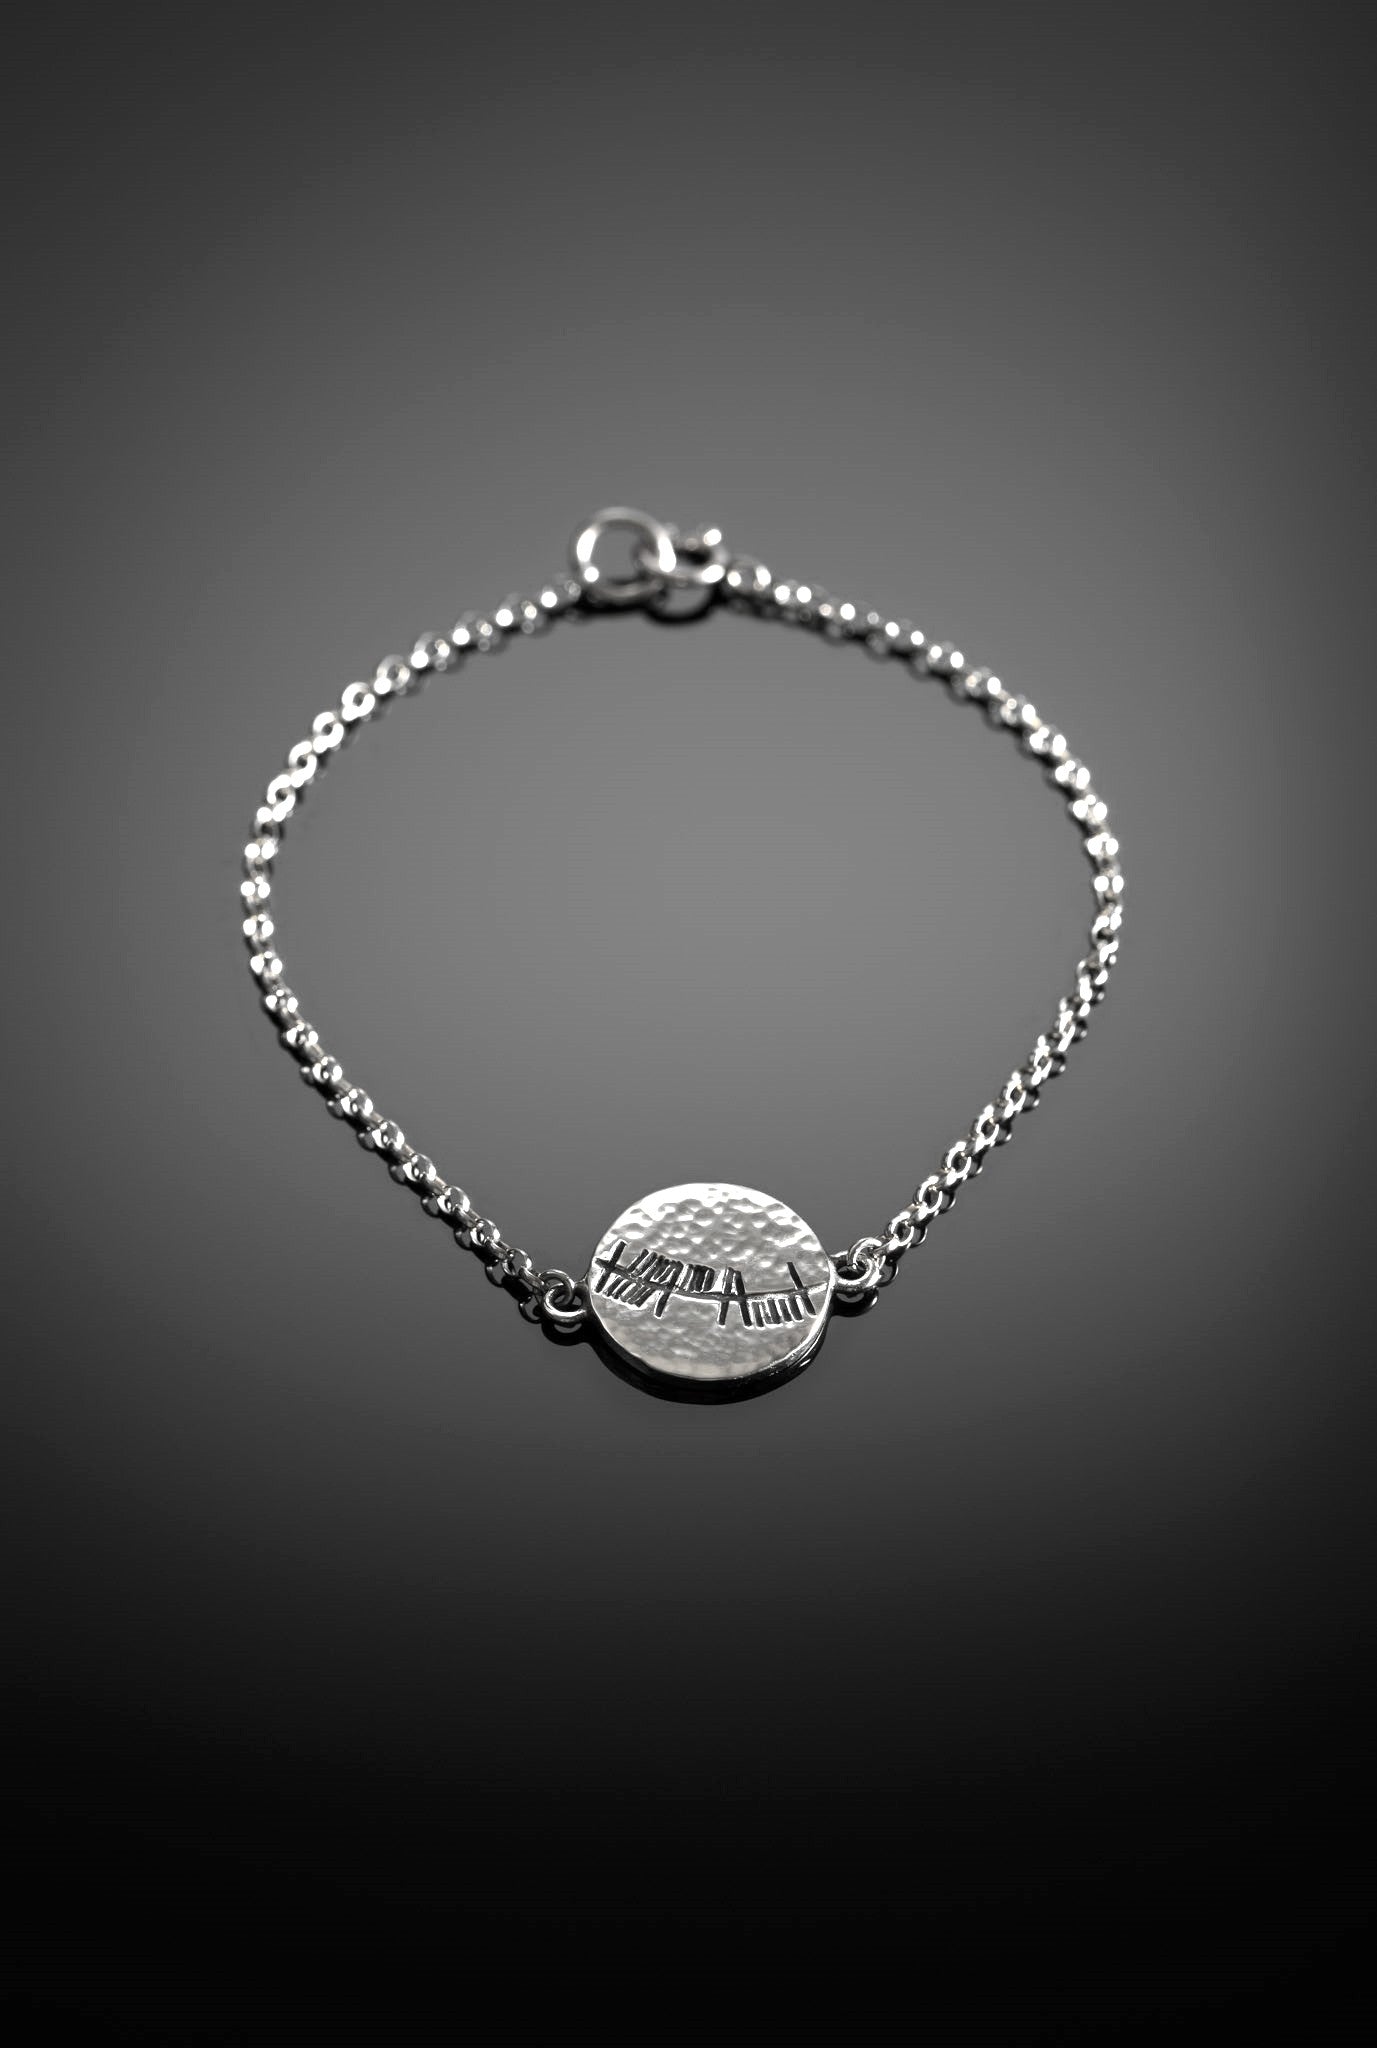 Anam cara bracelet in silver on black background